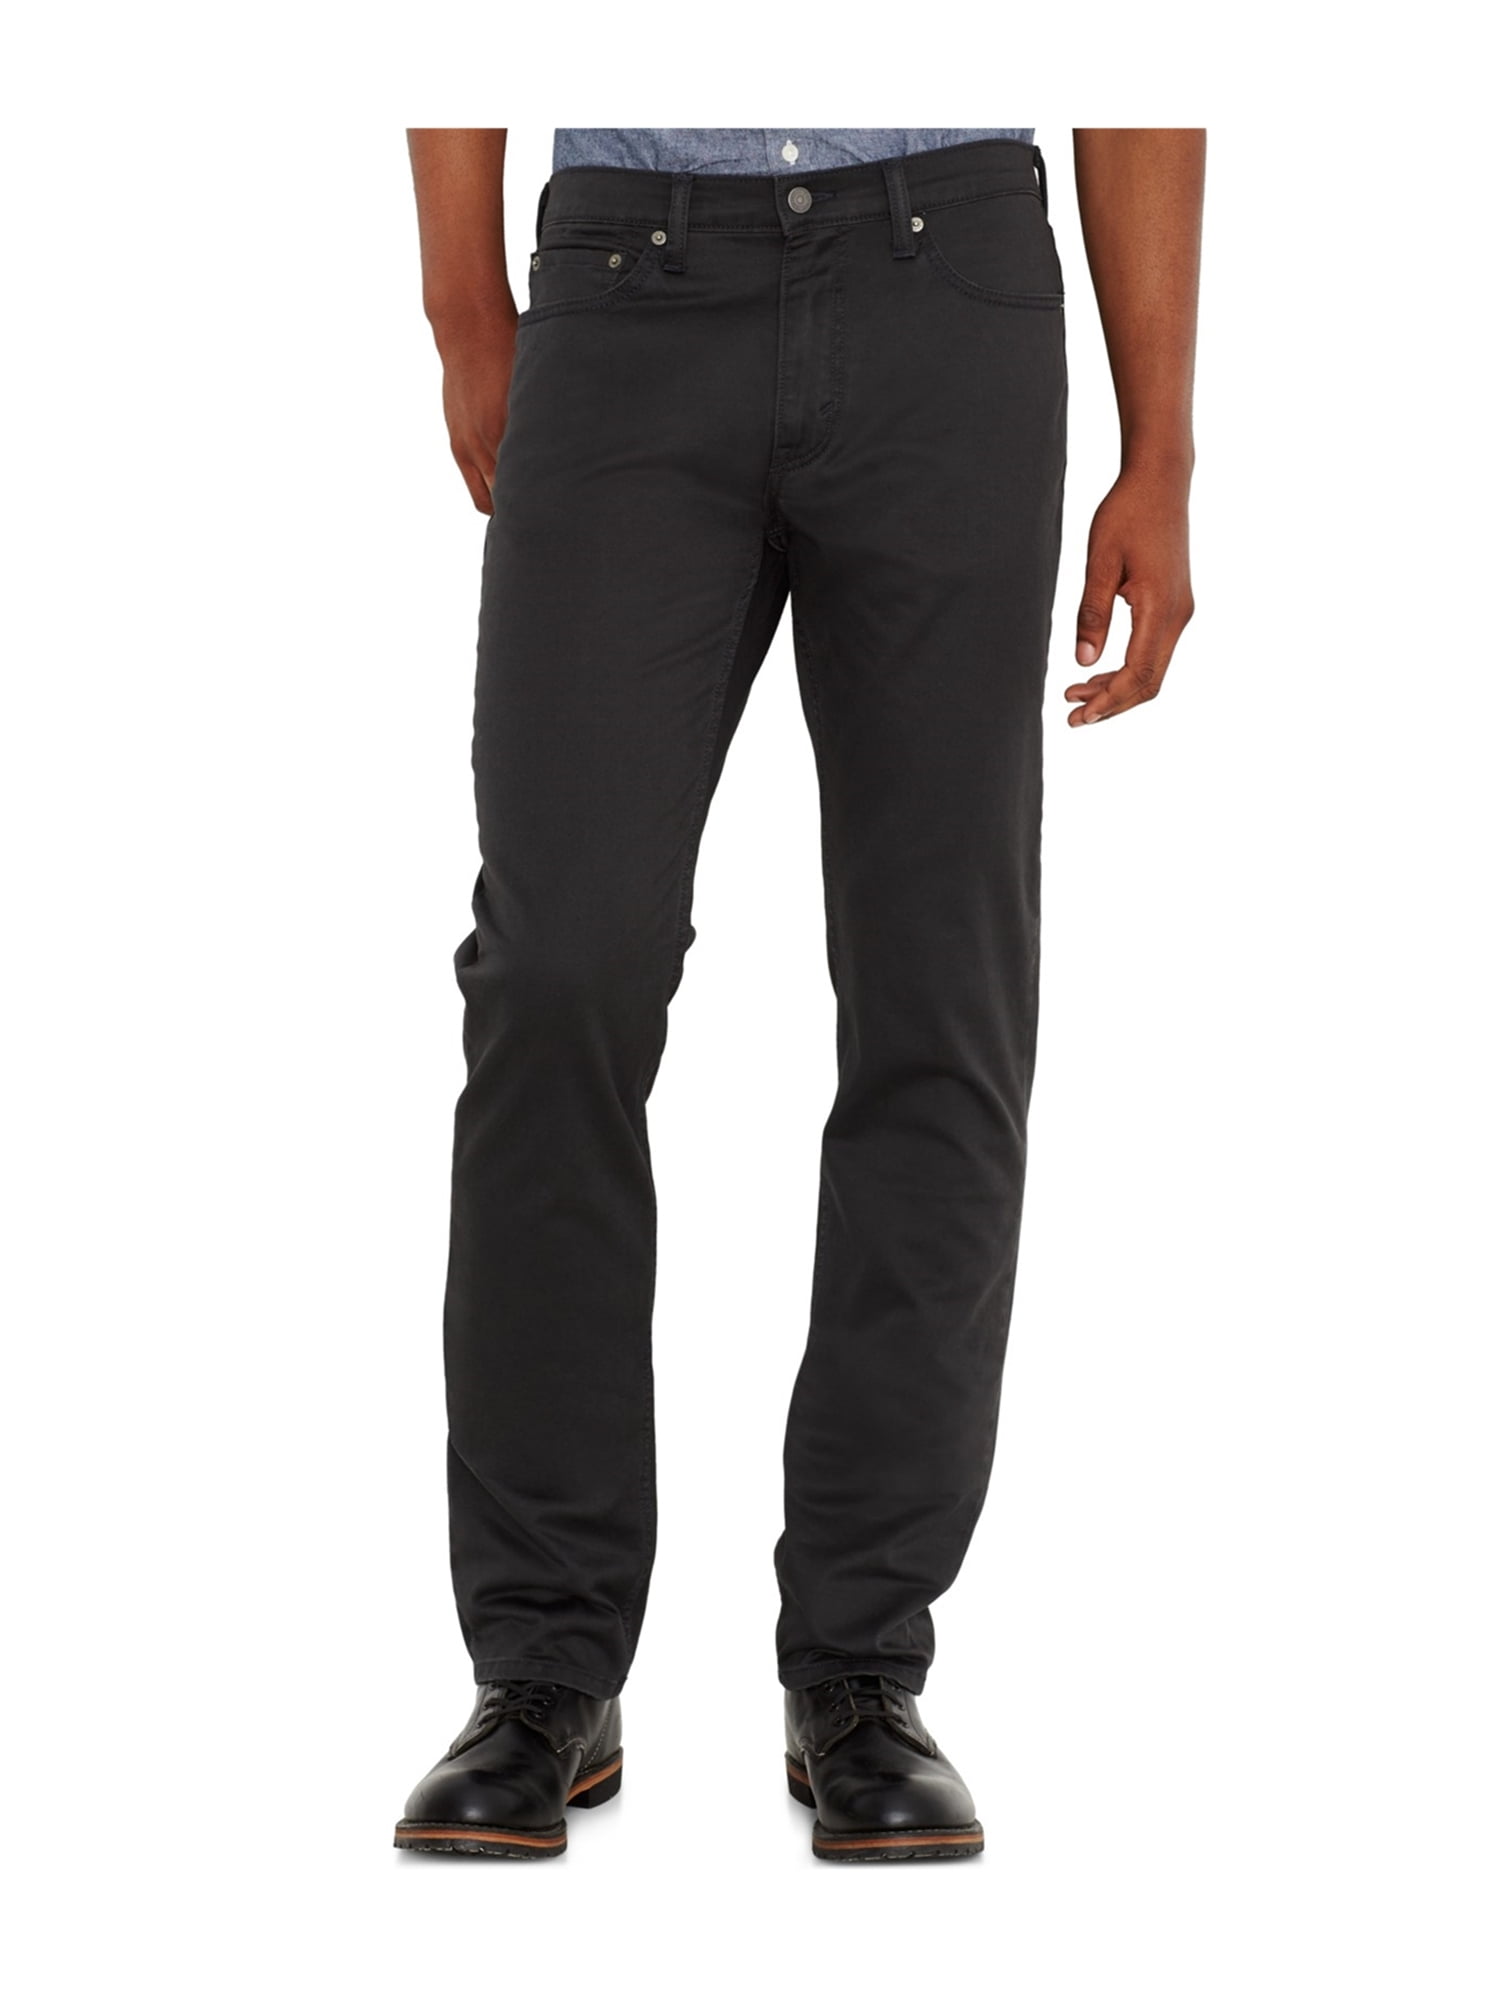 Levi's Mens Athletic Stretch Jeans graphite 44x34 | Walmart Canada